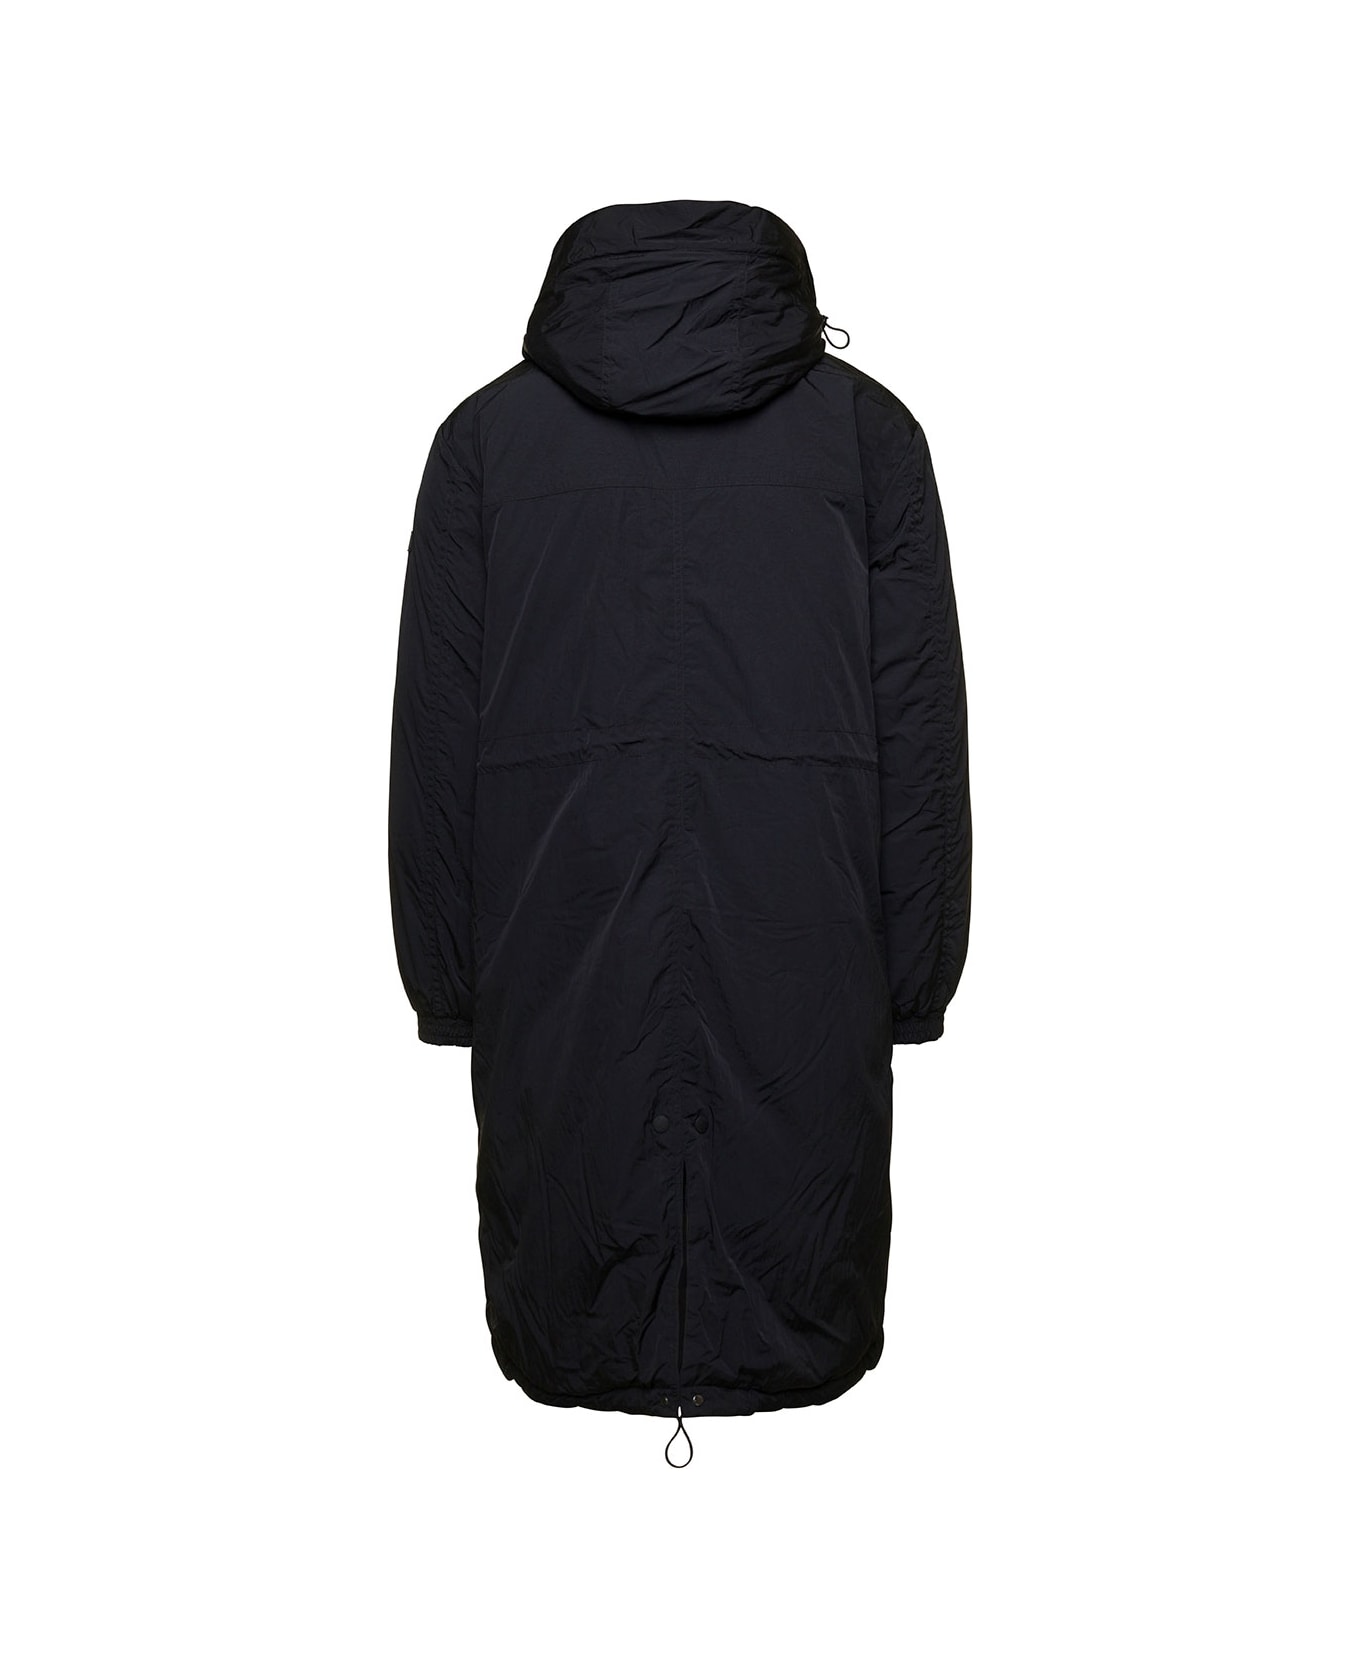 TATRAS 'rengo' Black Hooded Parka Jacket With Logo Patch In Nylon Man - Black